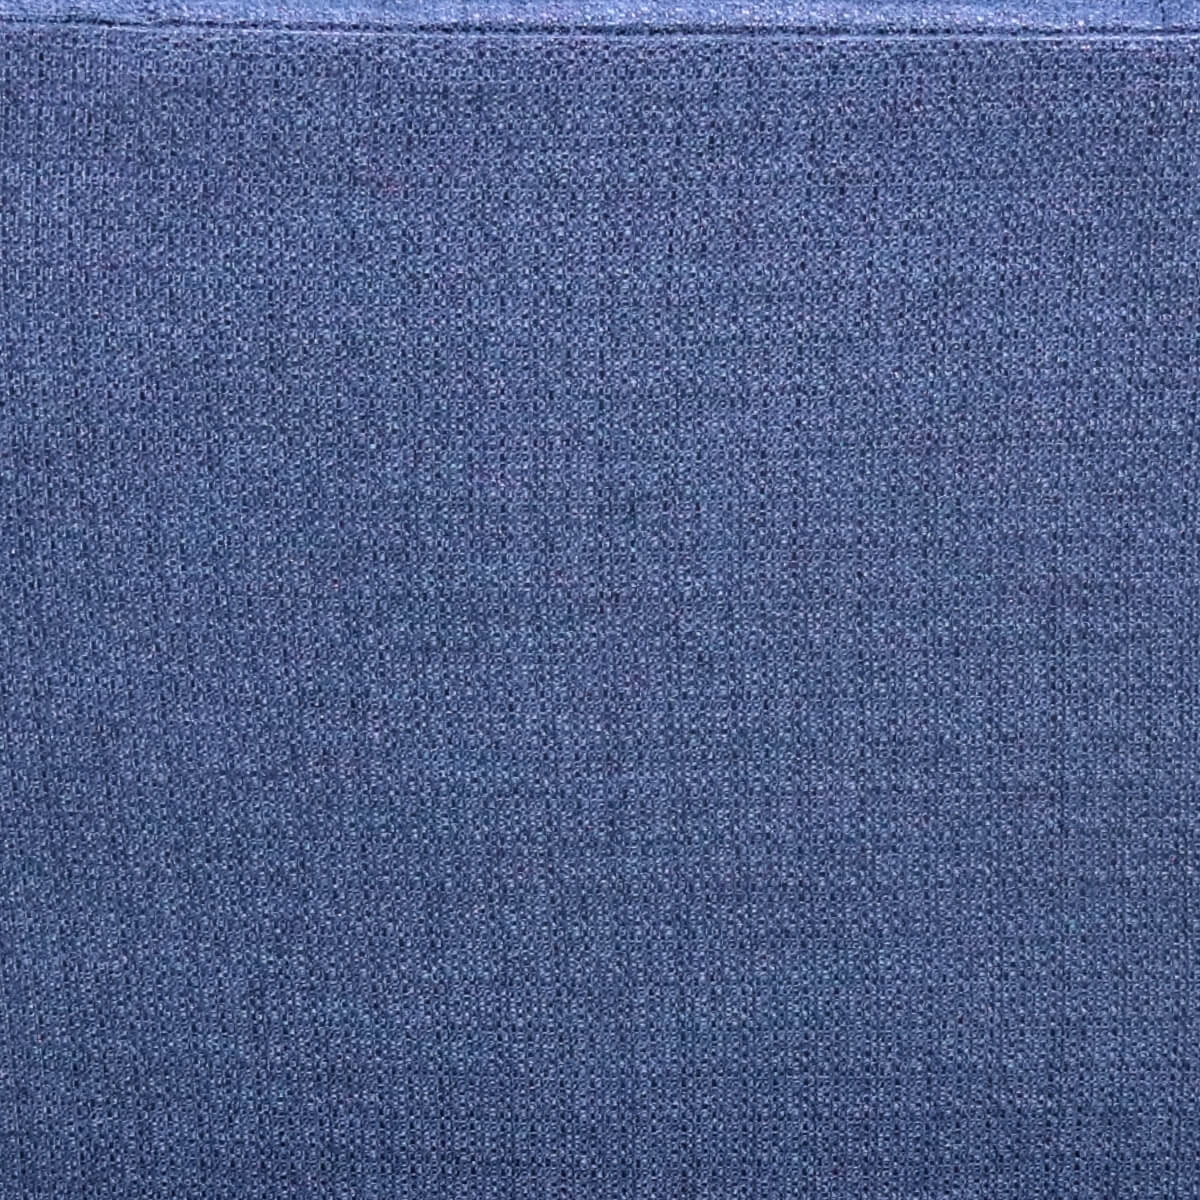 Detalle sillón con taburete individual azul donde comprar cerca de mi norval #color_marino